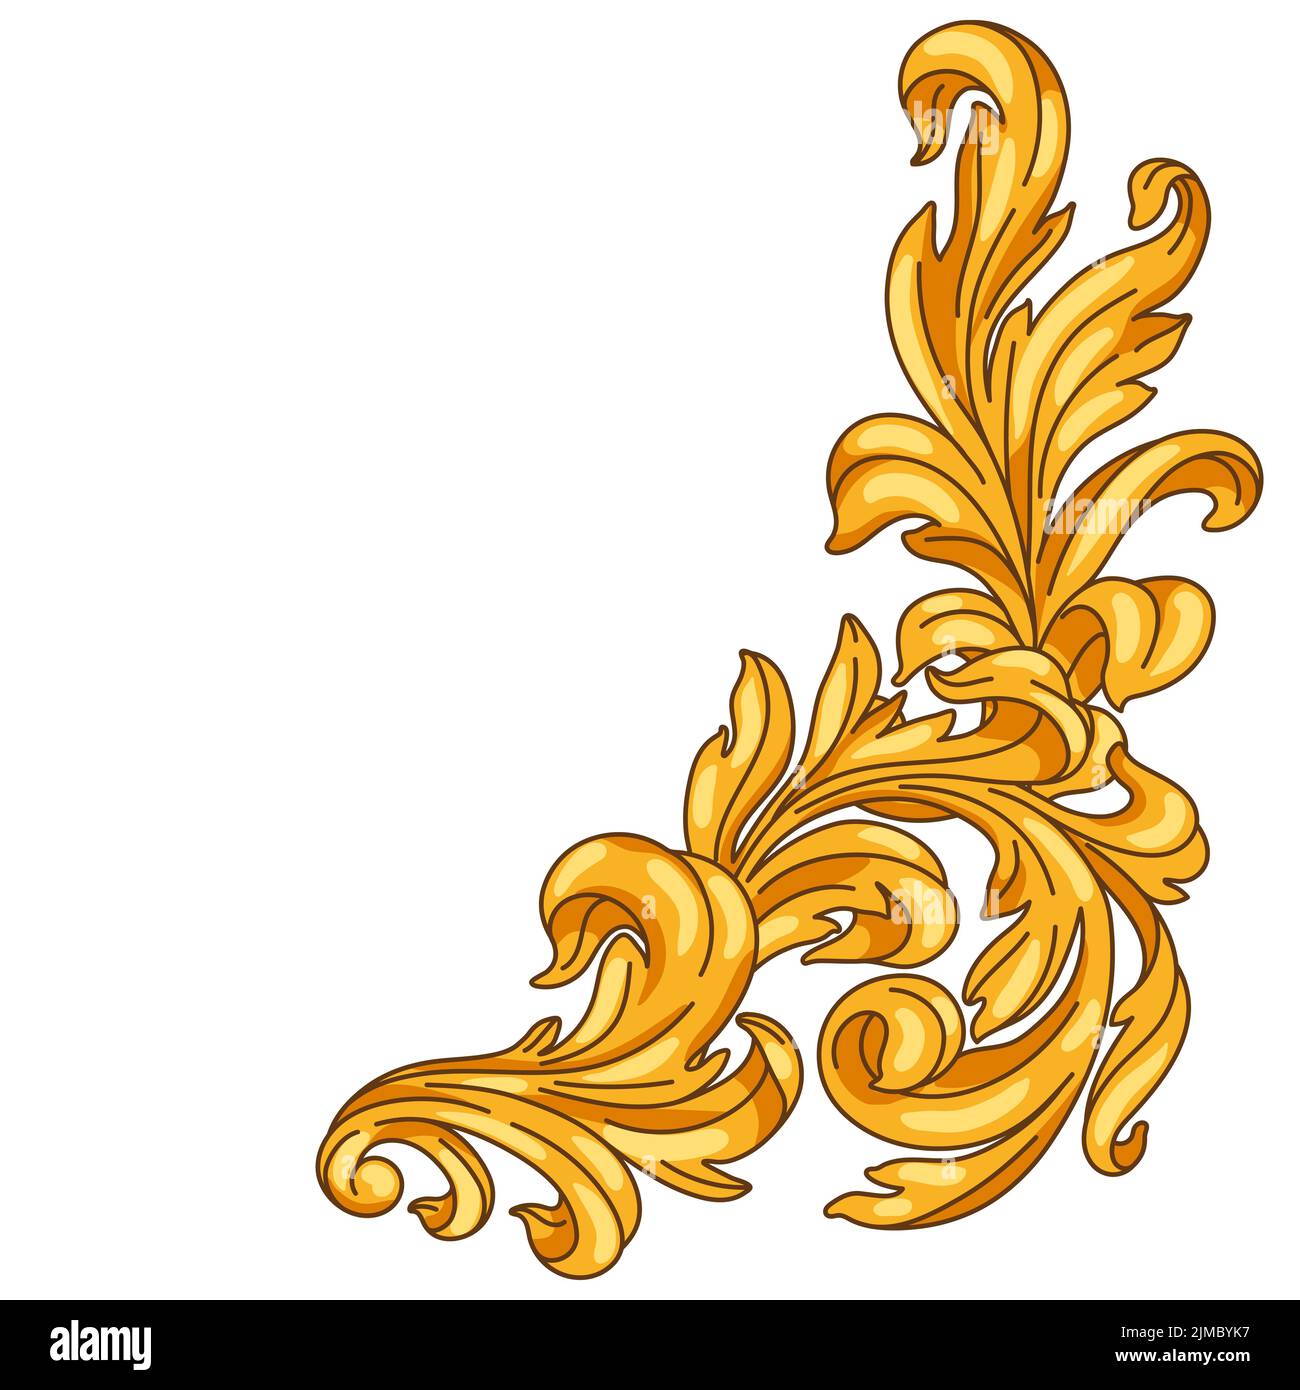 Dekorative Blumenecke im Barockstil. Goldene Curling-Pflanze. Vintage-Rahmen mit Wirbel. Stock Vektor